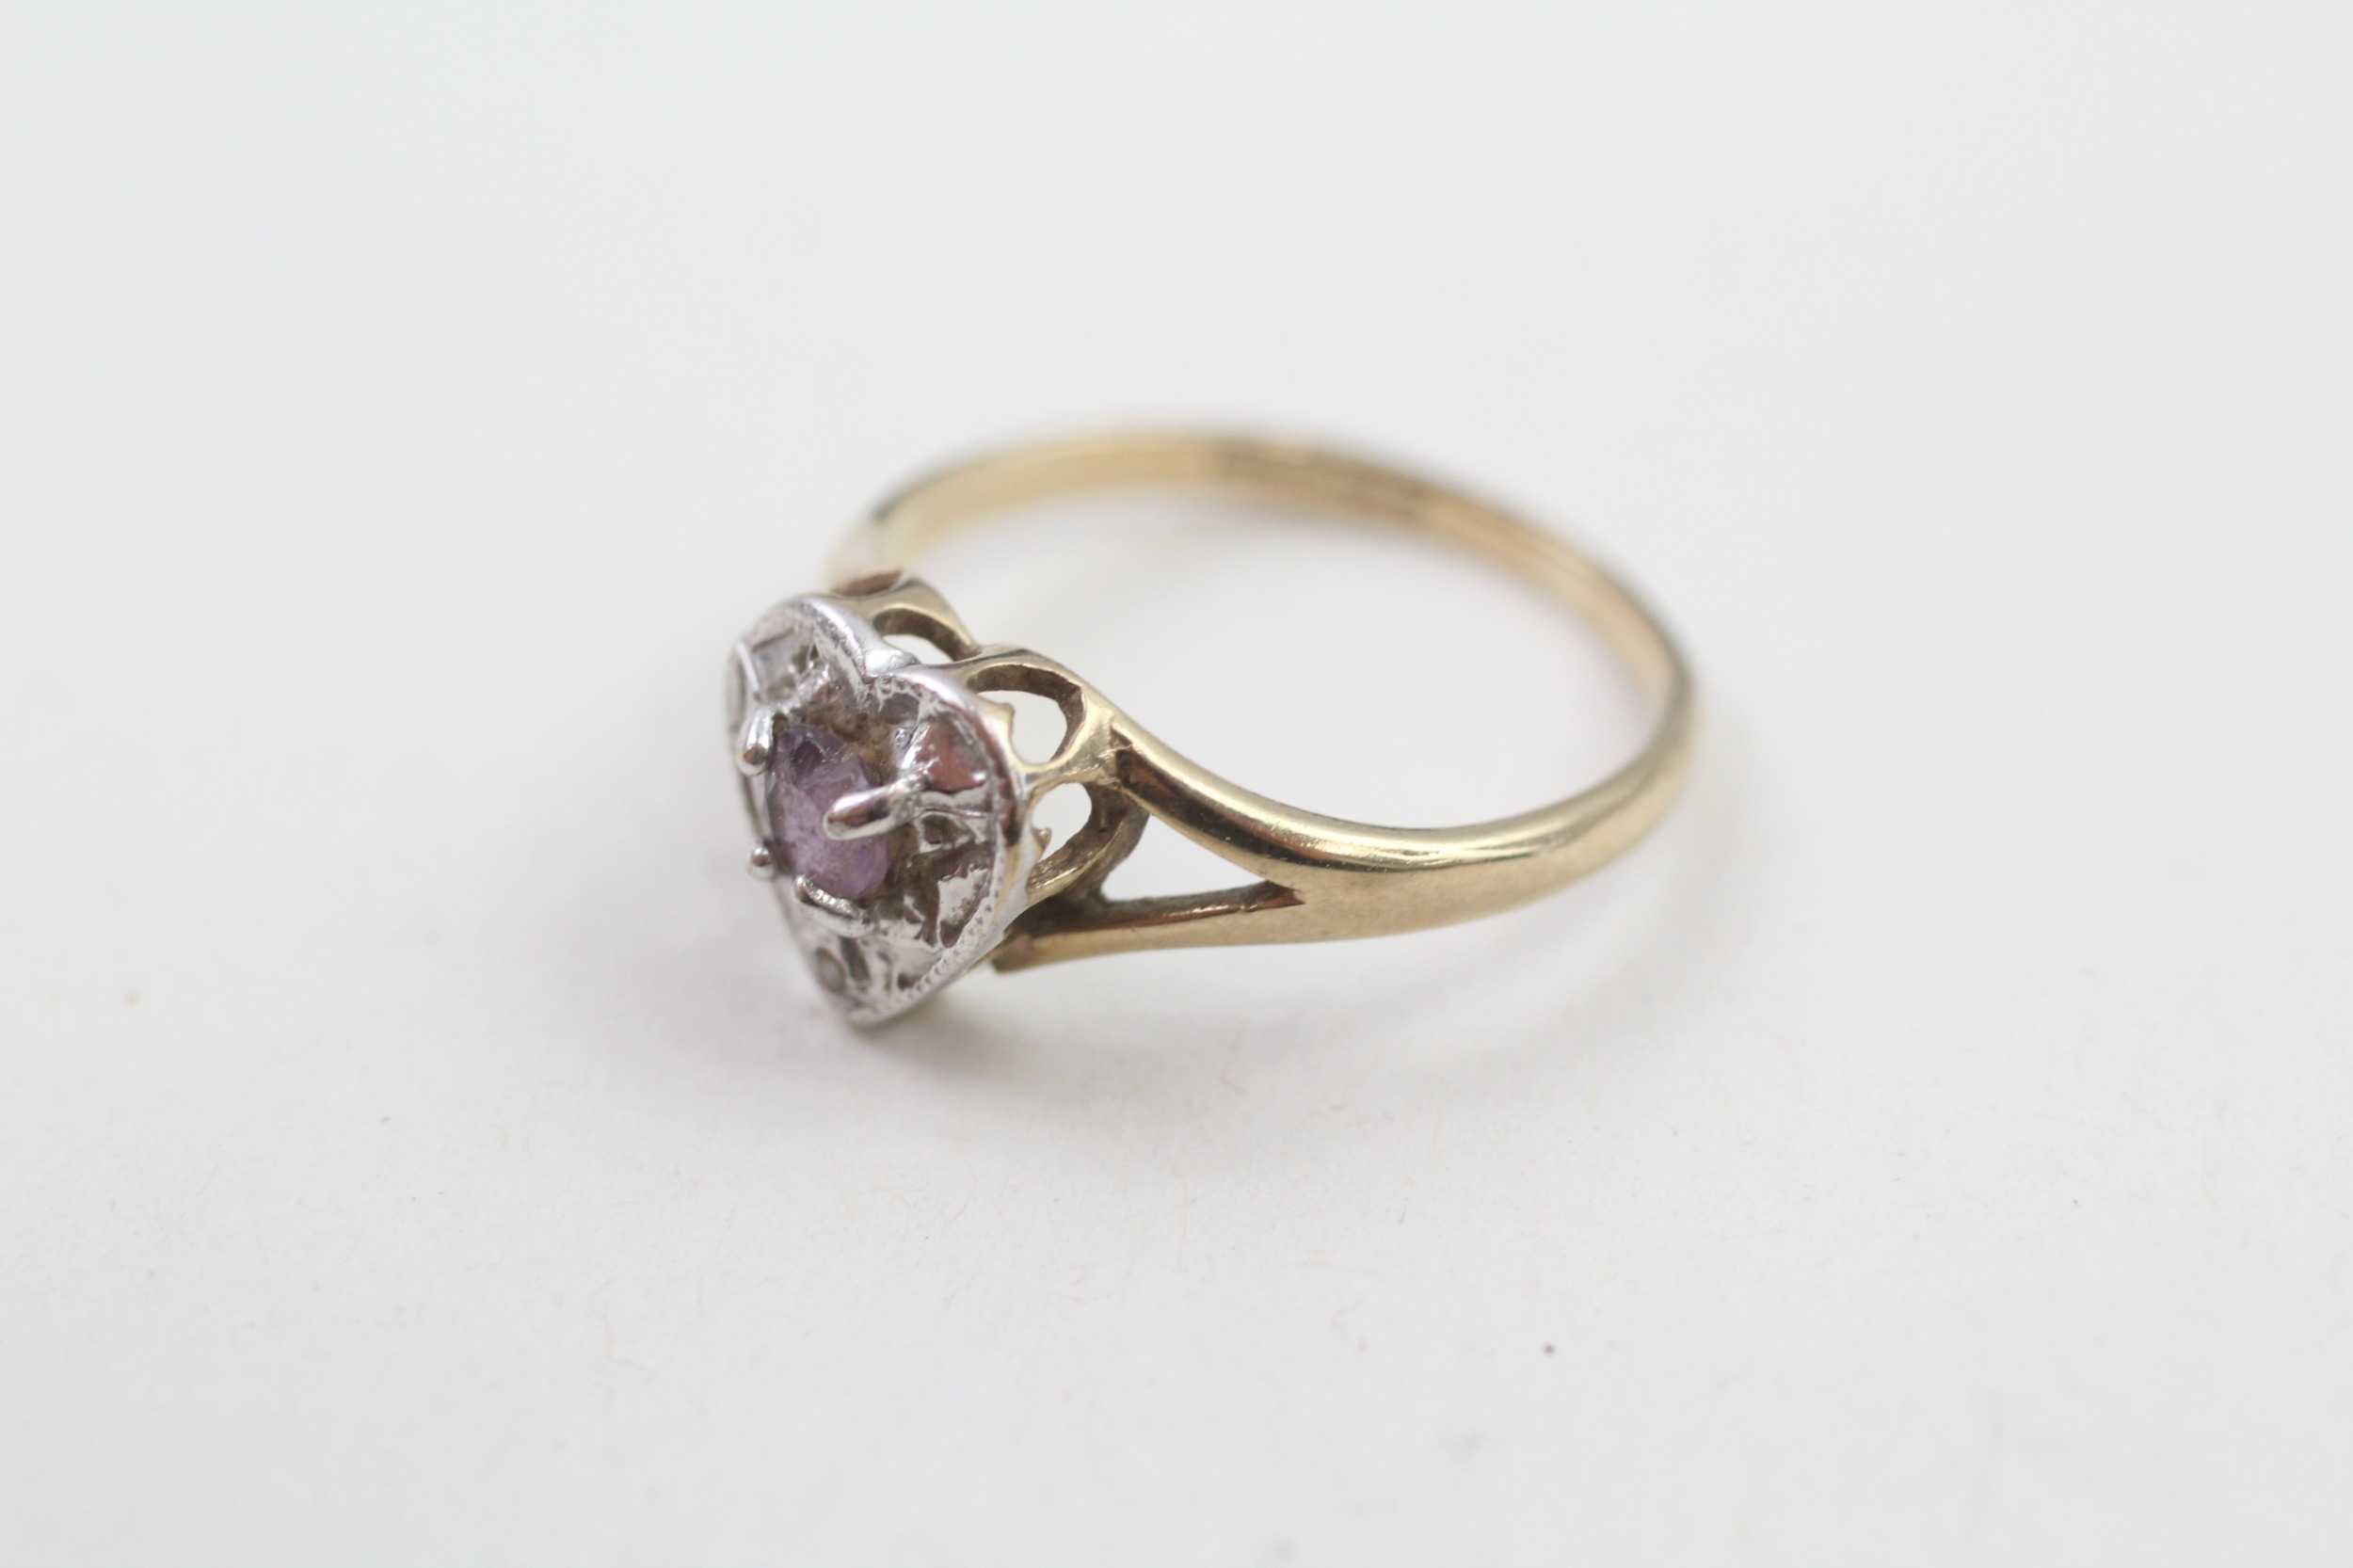 9ct gold purple & white gemstone dress ring (1.5g) - Image 2 of 4